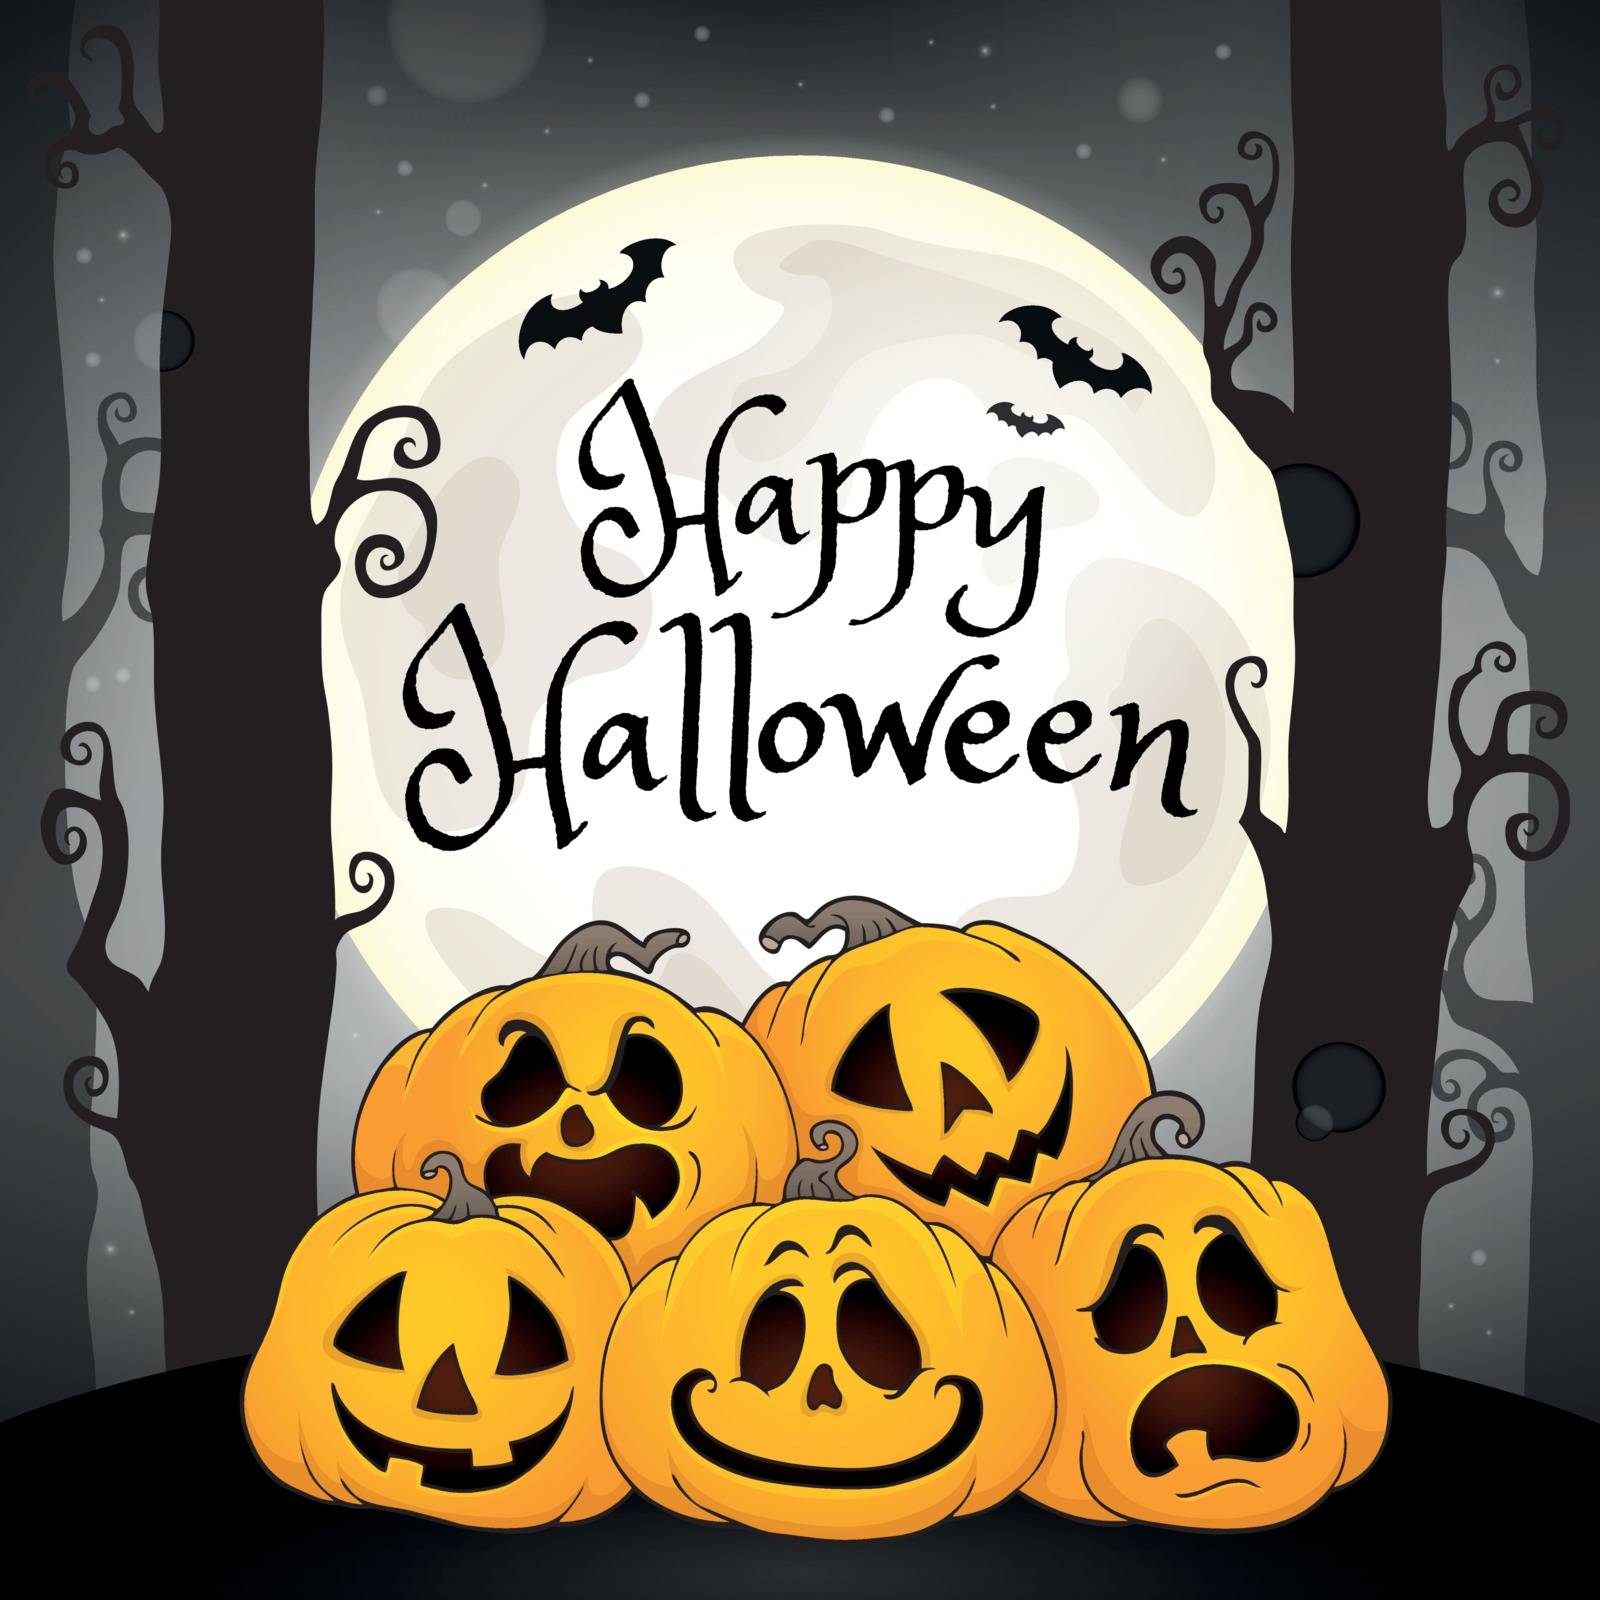 Happy Halloween composition image 5 - eps10 vector illustration.